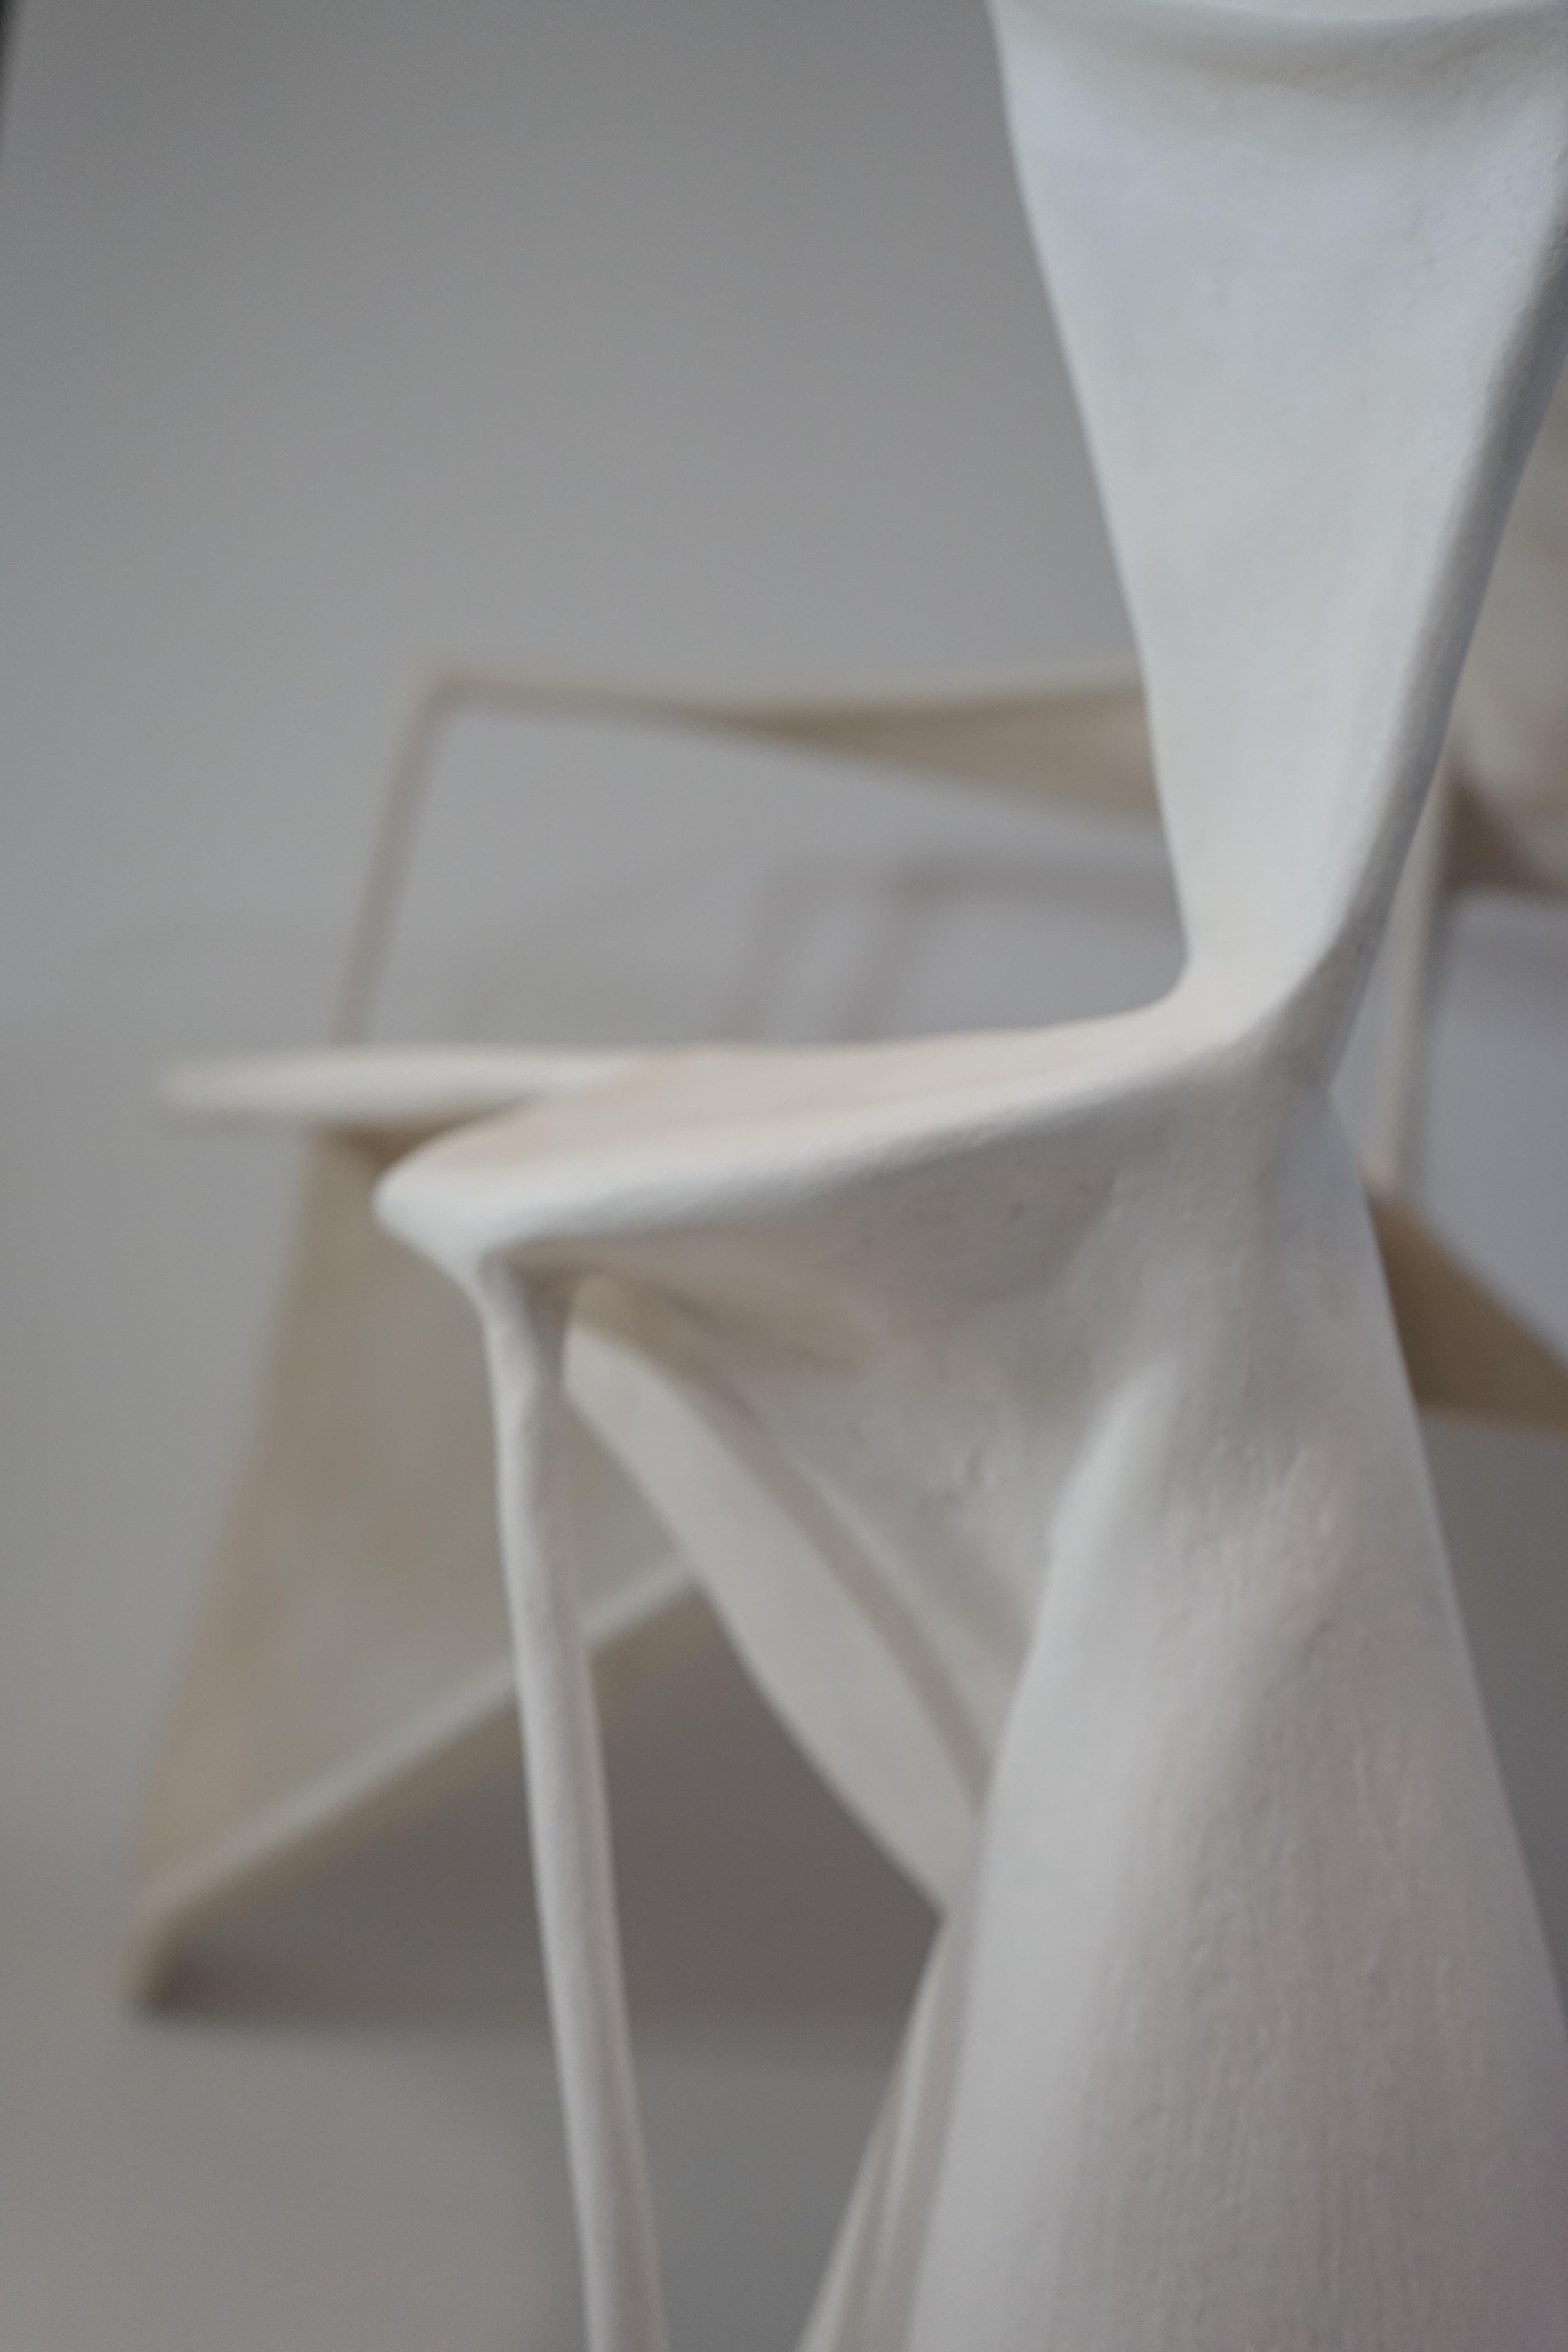 Contemporary Design White Textured Curved Sculptures Chair by Jordan van der Ven For Sale 3